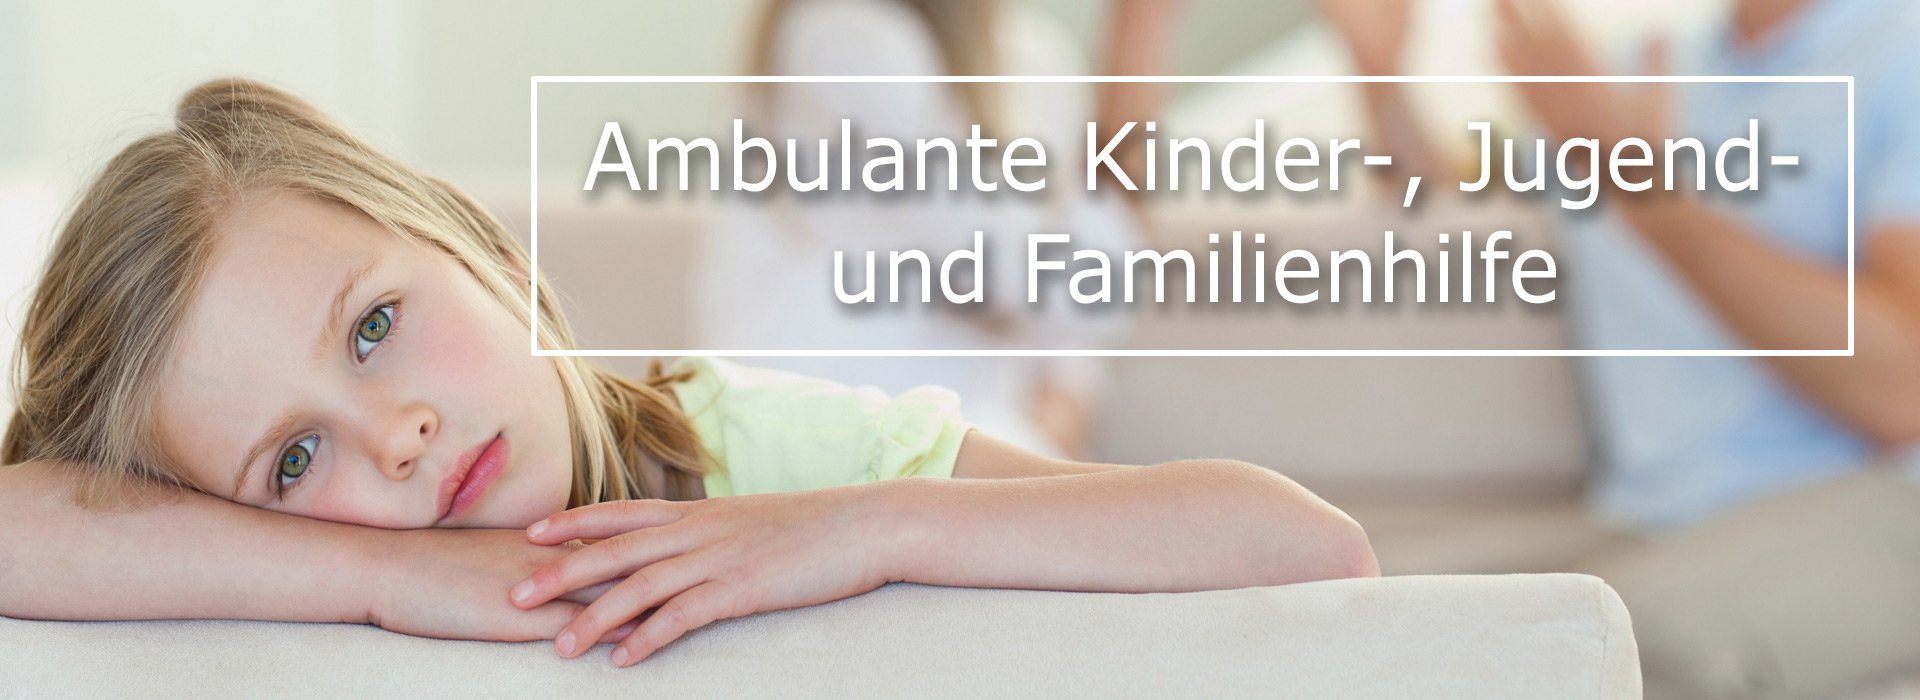 SKM RheinSiegKreis e. V.  Ambulante Kinder Jugend und Familienhilfe